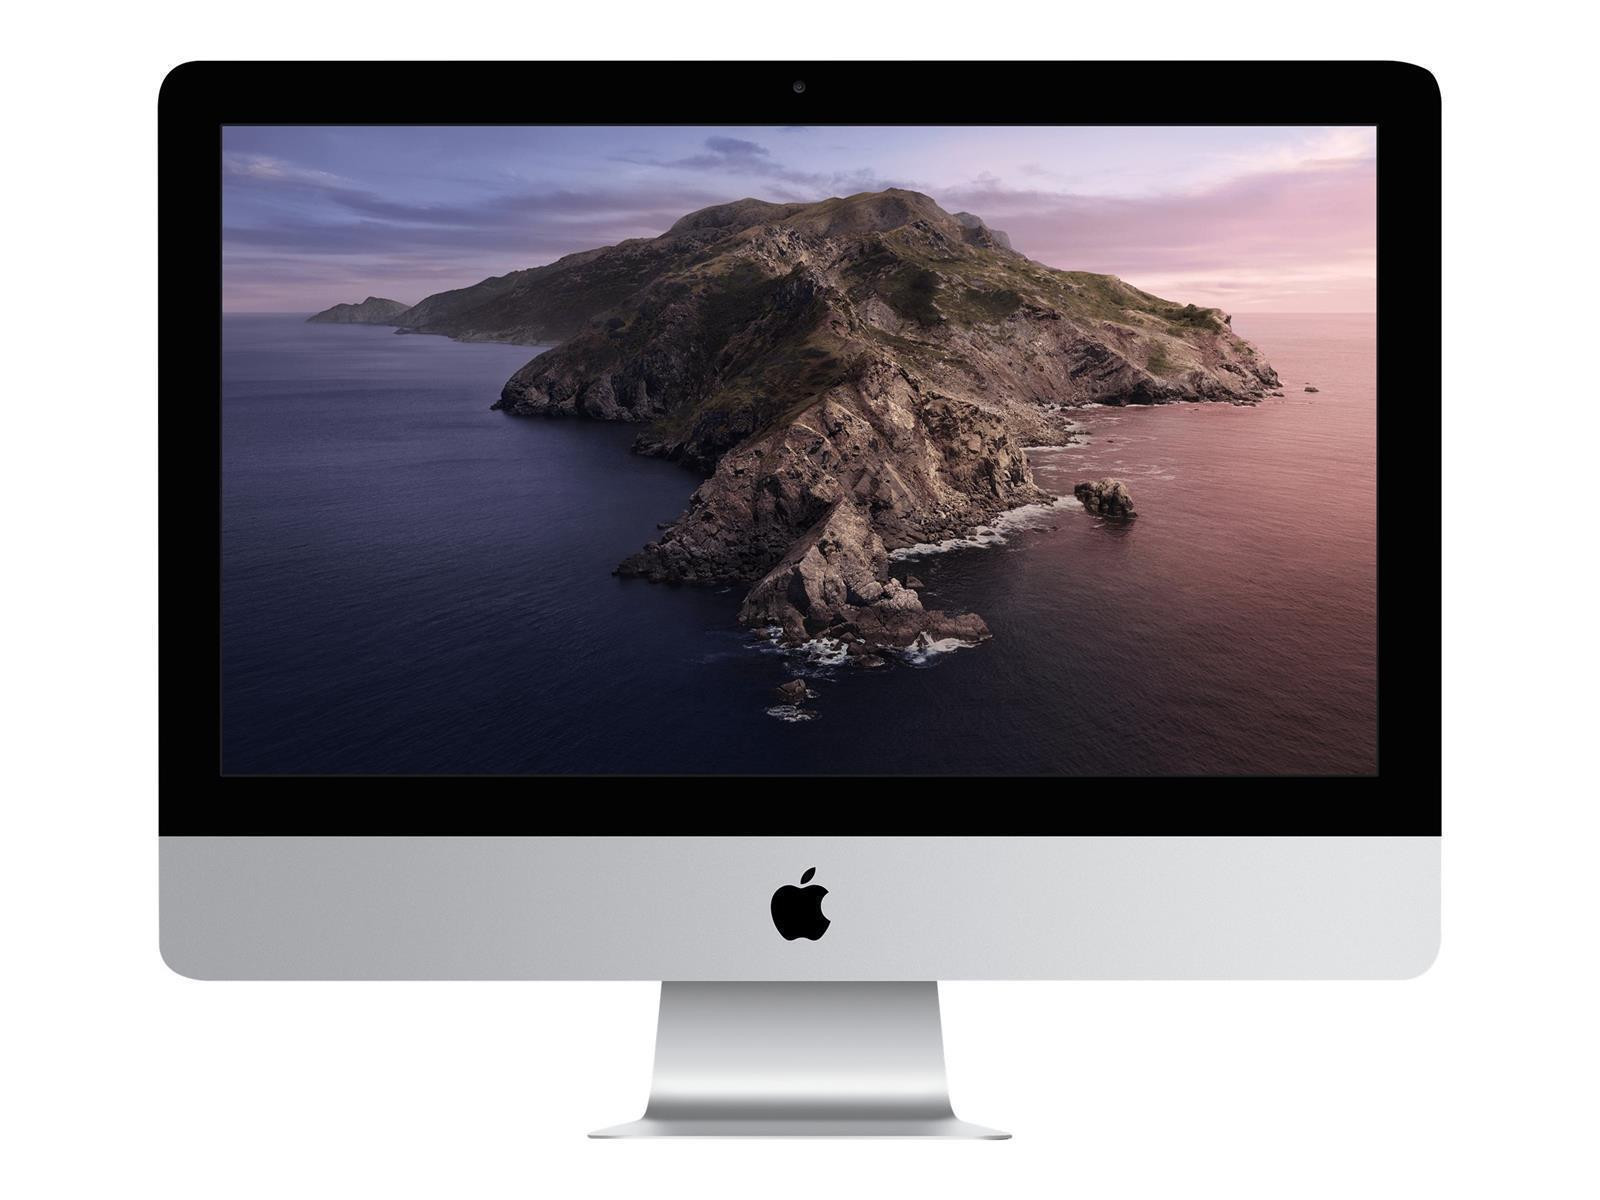 Apple iMac Late 2012 13,1 21,5" Intel Core i5-3330S 2,70GHz 8GB RAM 1TB HDD macOS